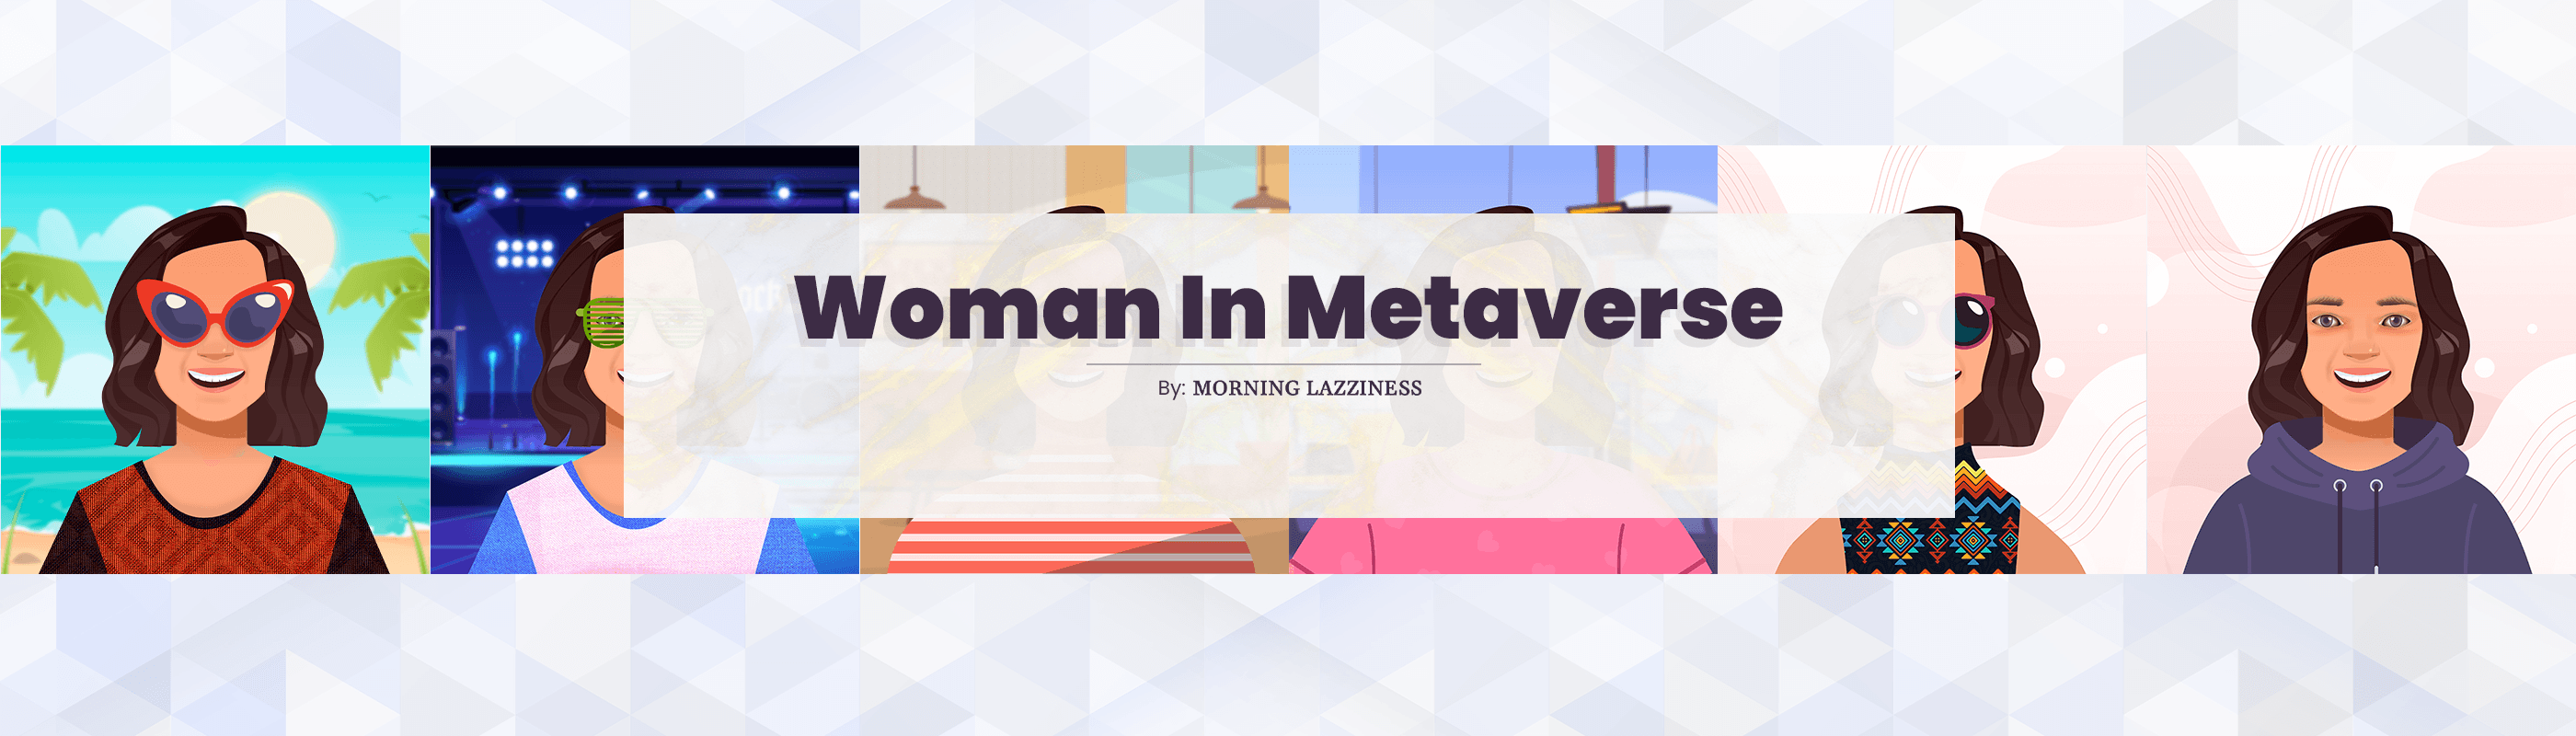 Woman_In_Metaverse banner